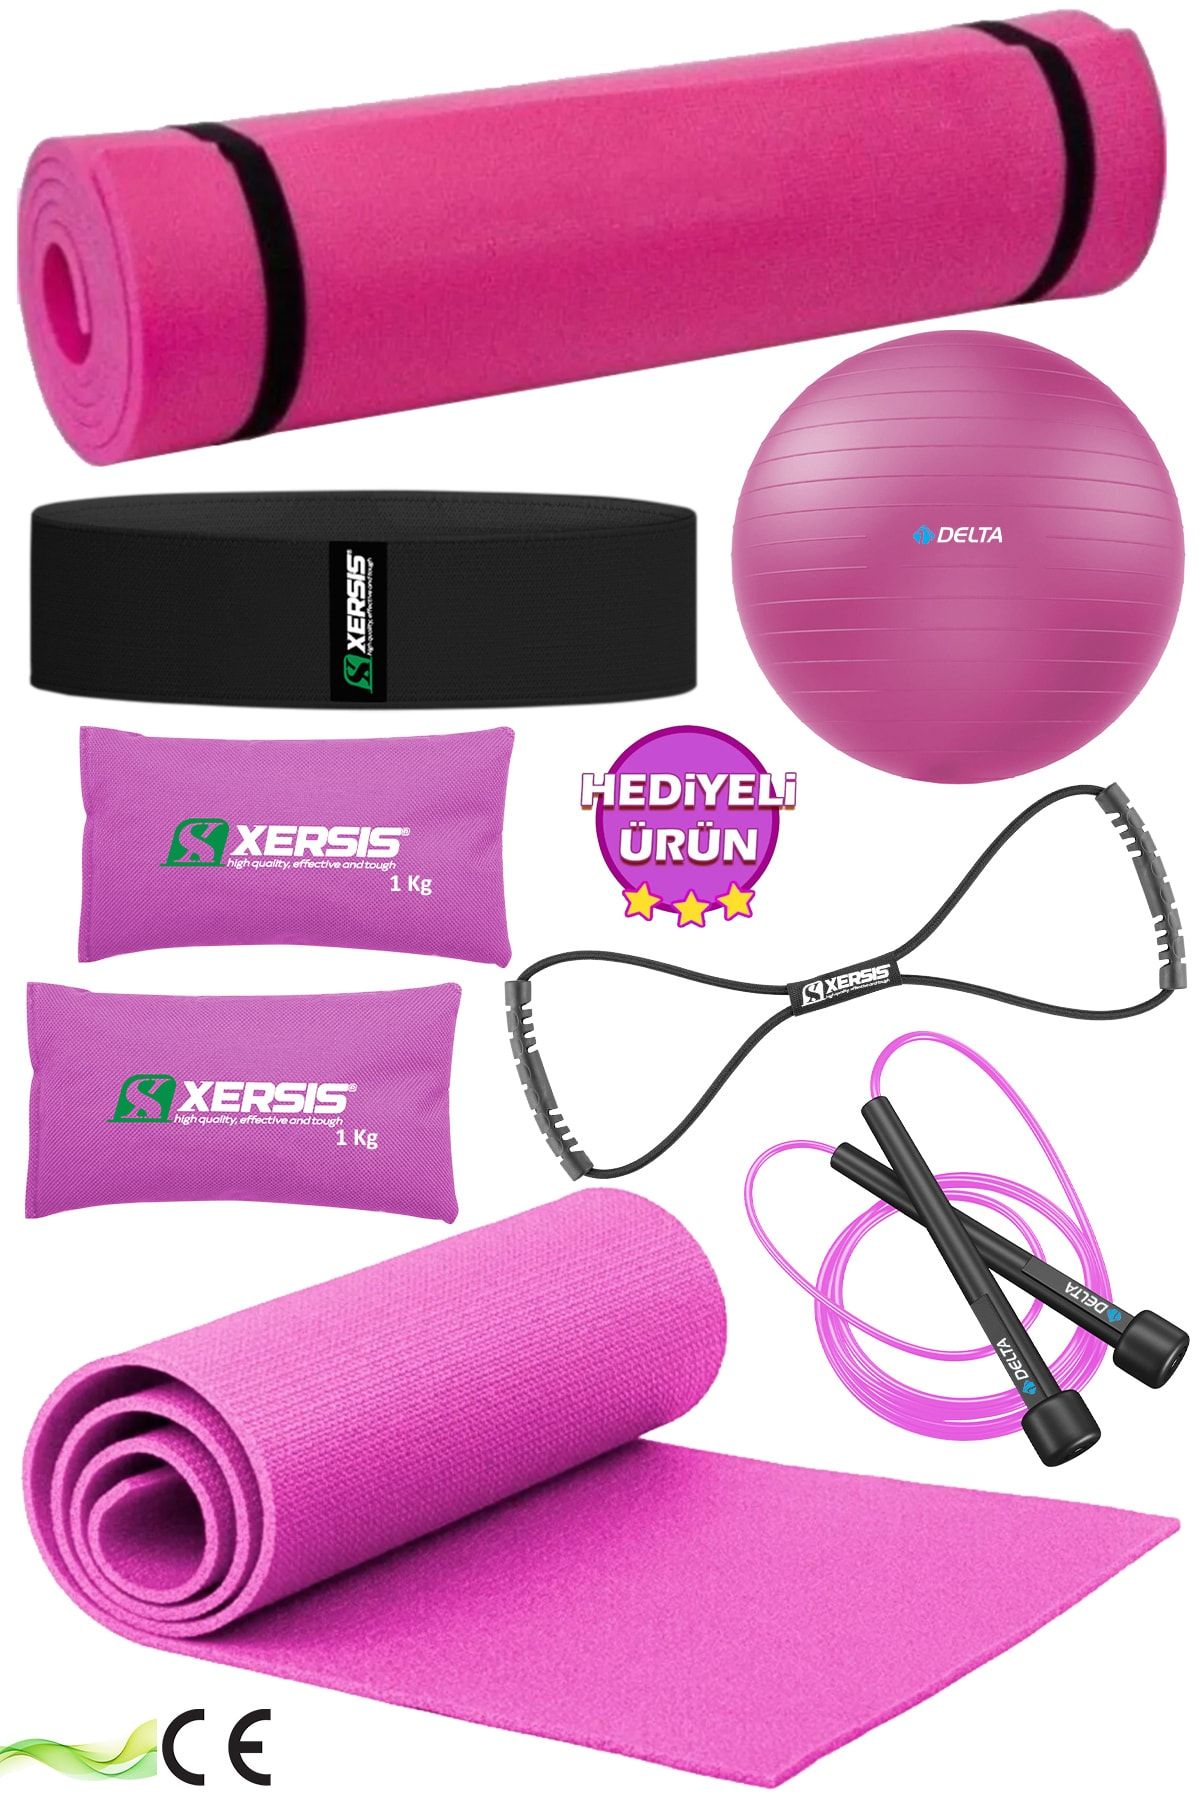 Xersis Deluxe Pilates Seti Pilates Topu Yoga Set 2adet Dambıl Pilates Minderi Pilates Band Spor Malzemeleri